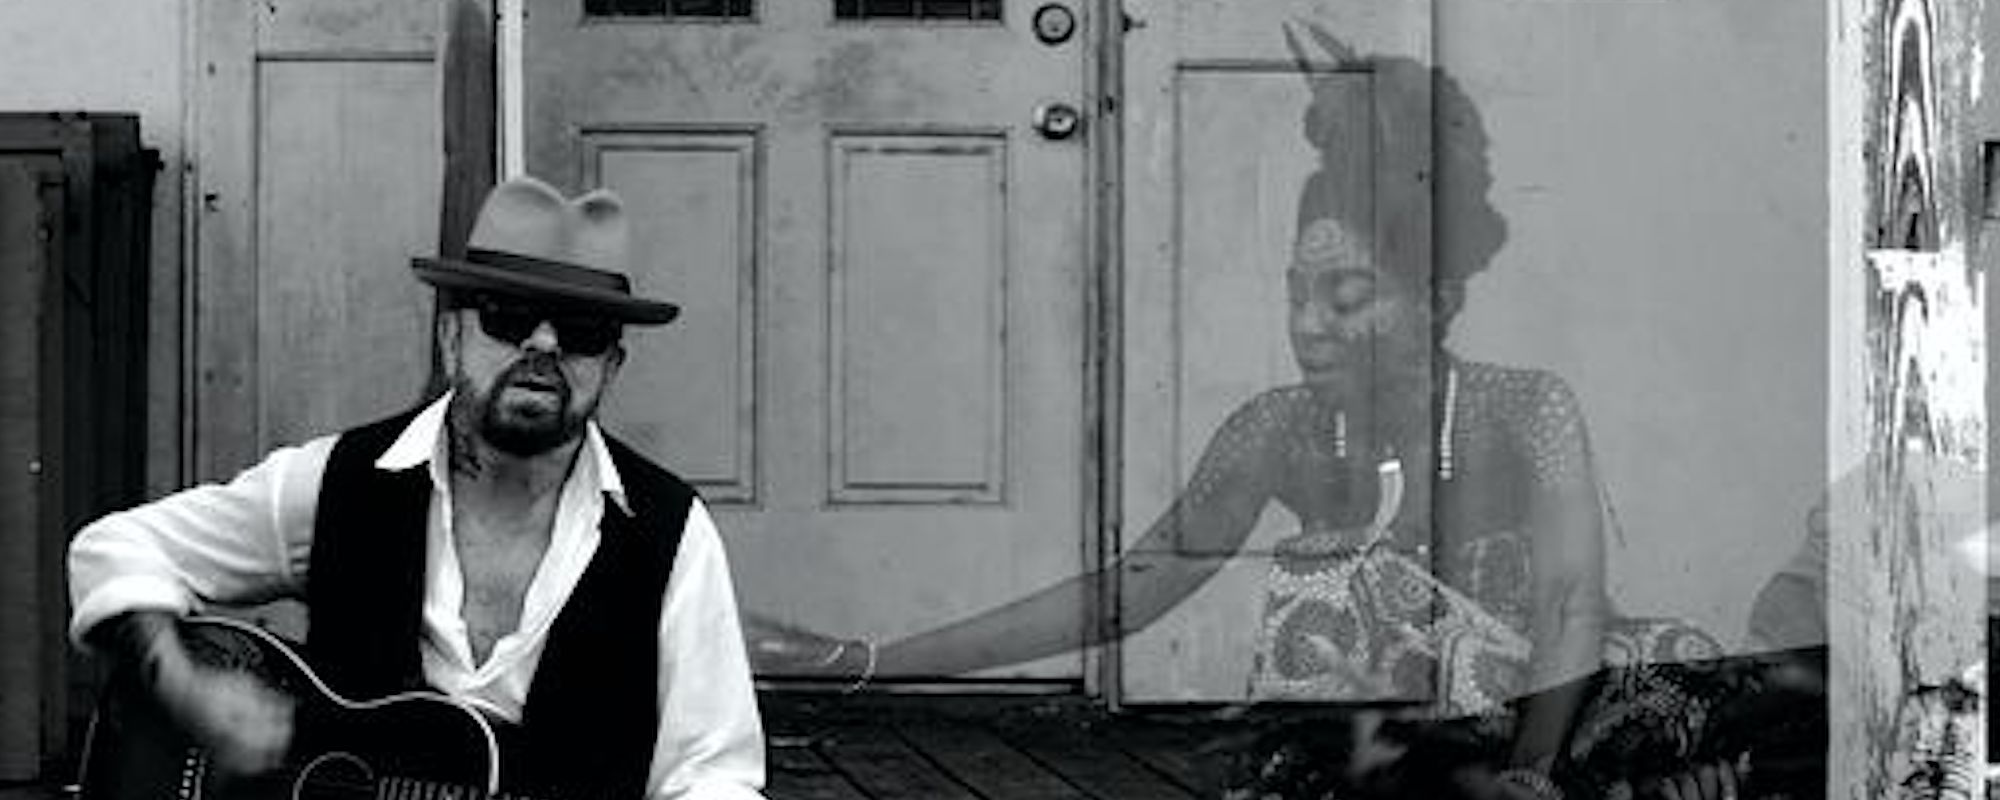 Dave Stewart Meets ‘Ebony McQueen’ in 26-Track Opus